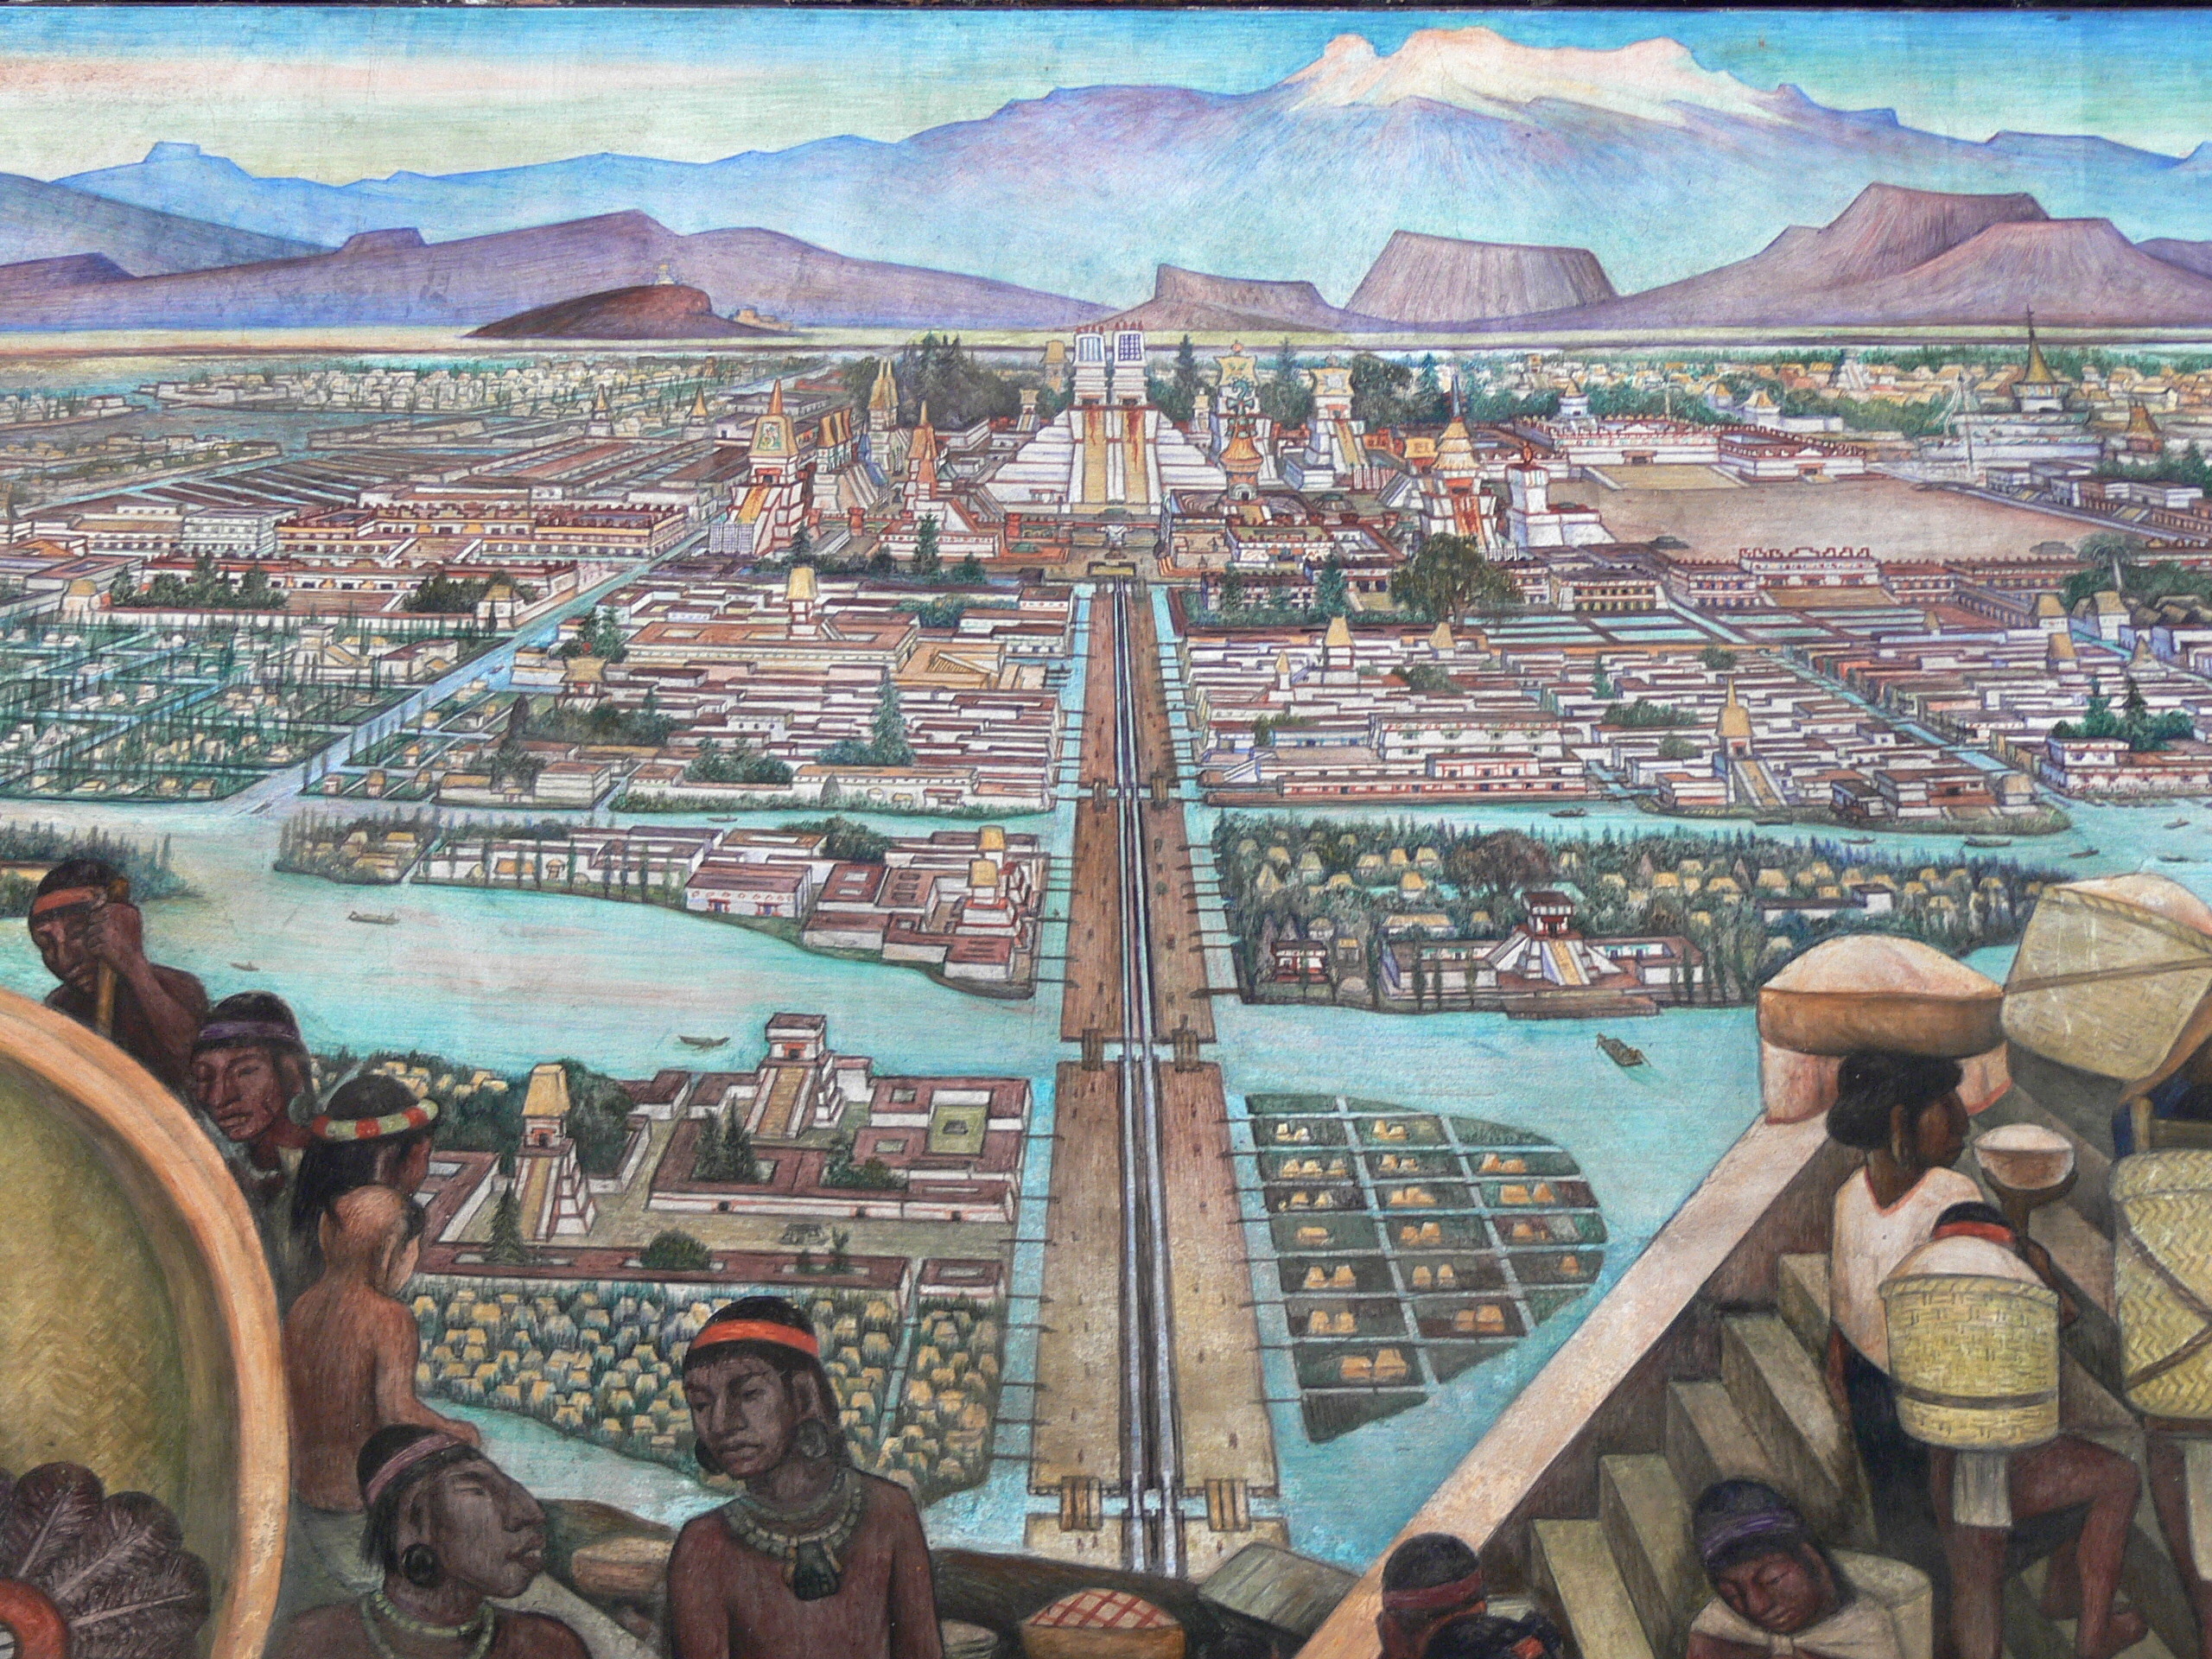 Tenochtitlan. The city of Mexico-Tenochtitlan ...